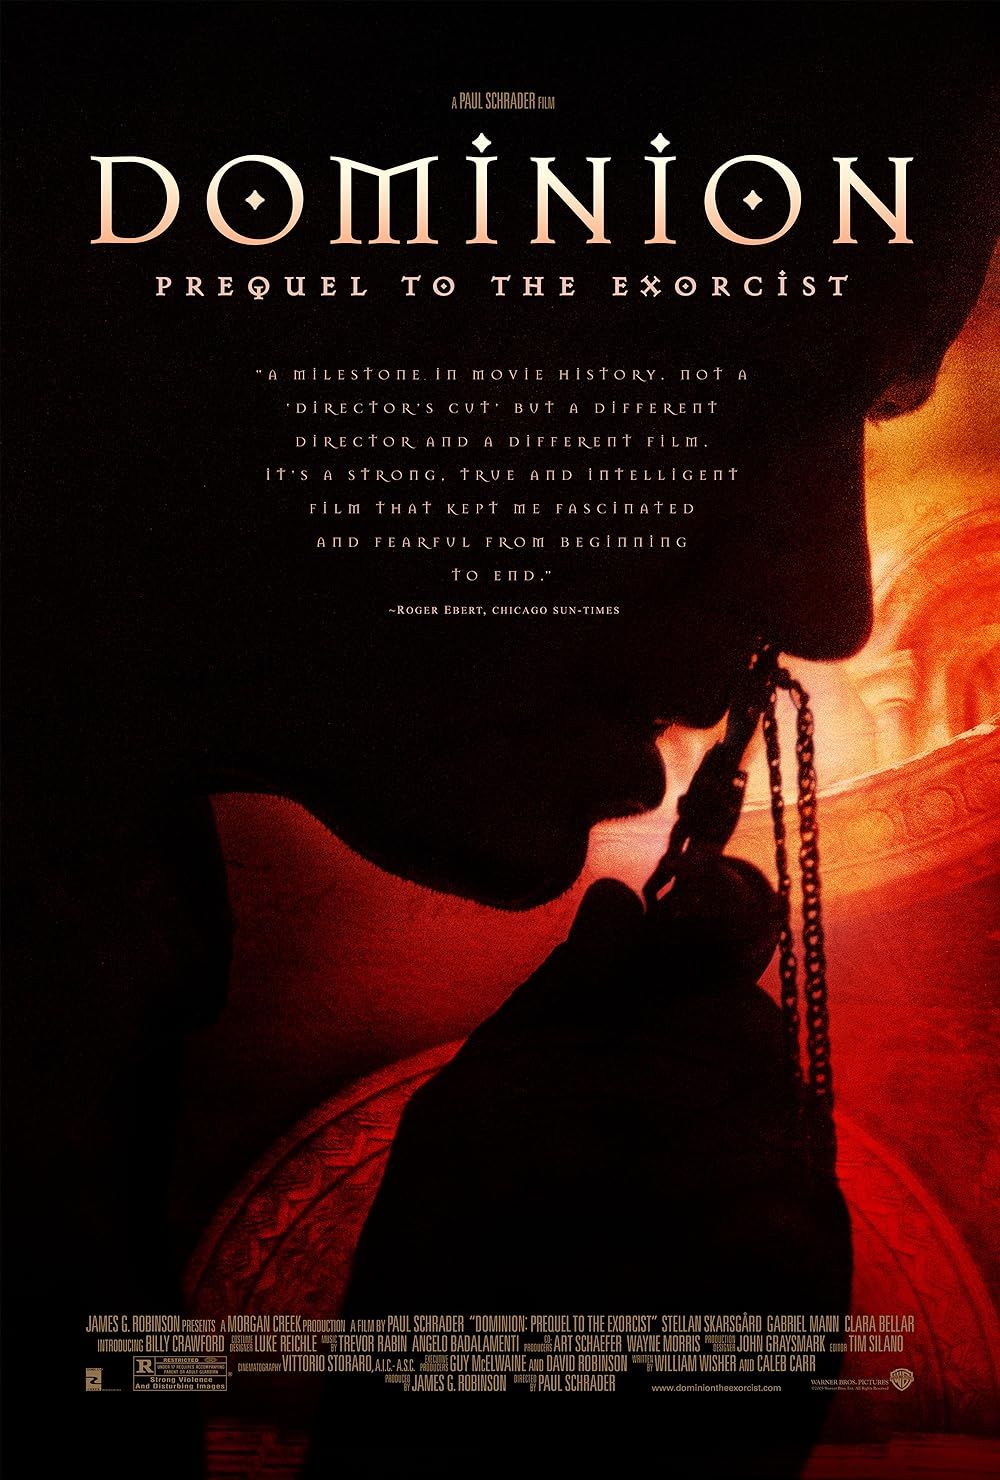 Dominon Prequel to The Exorcist Poster-1